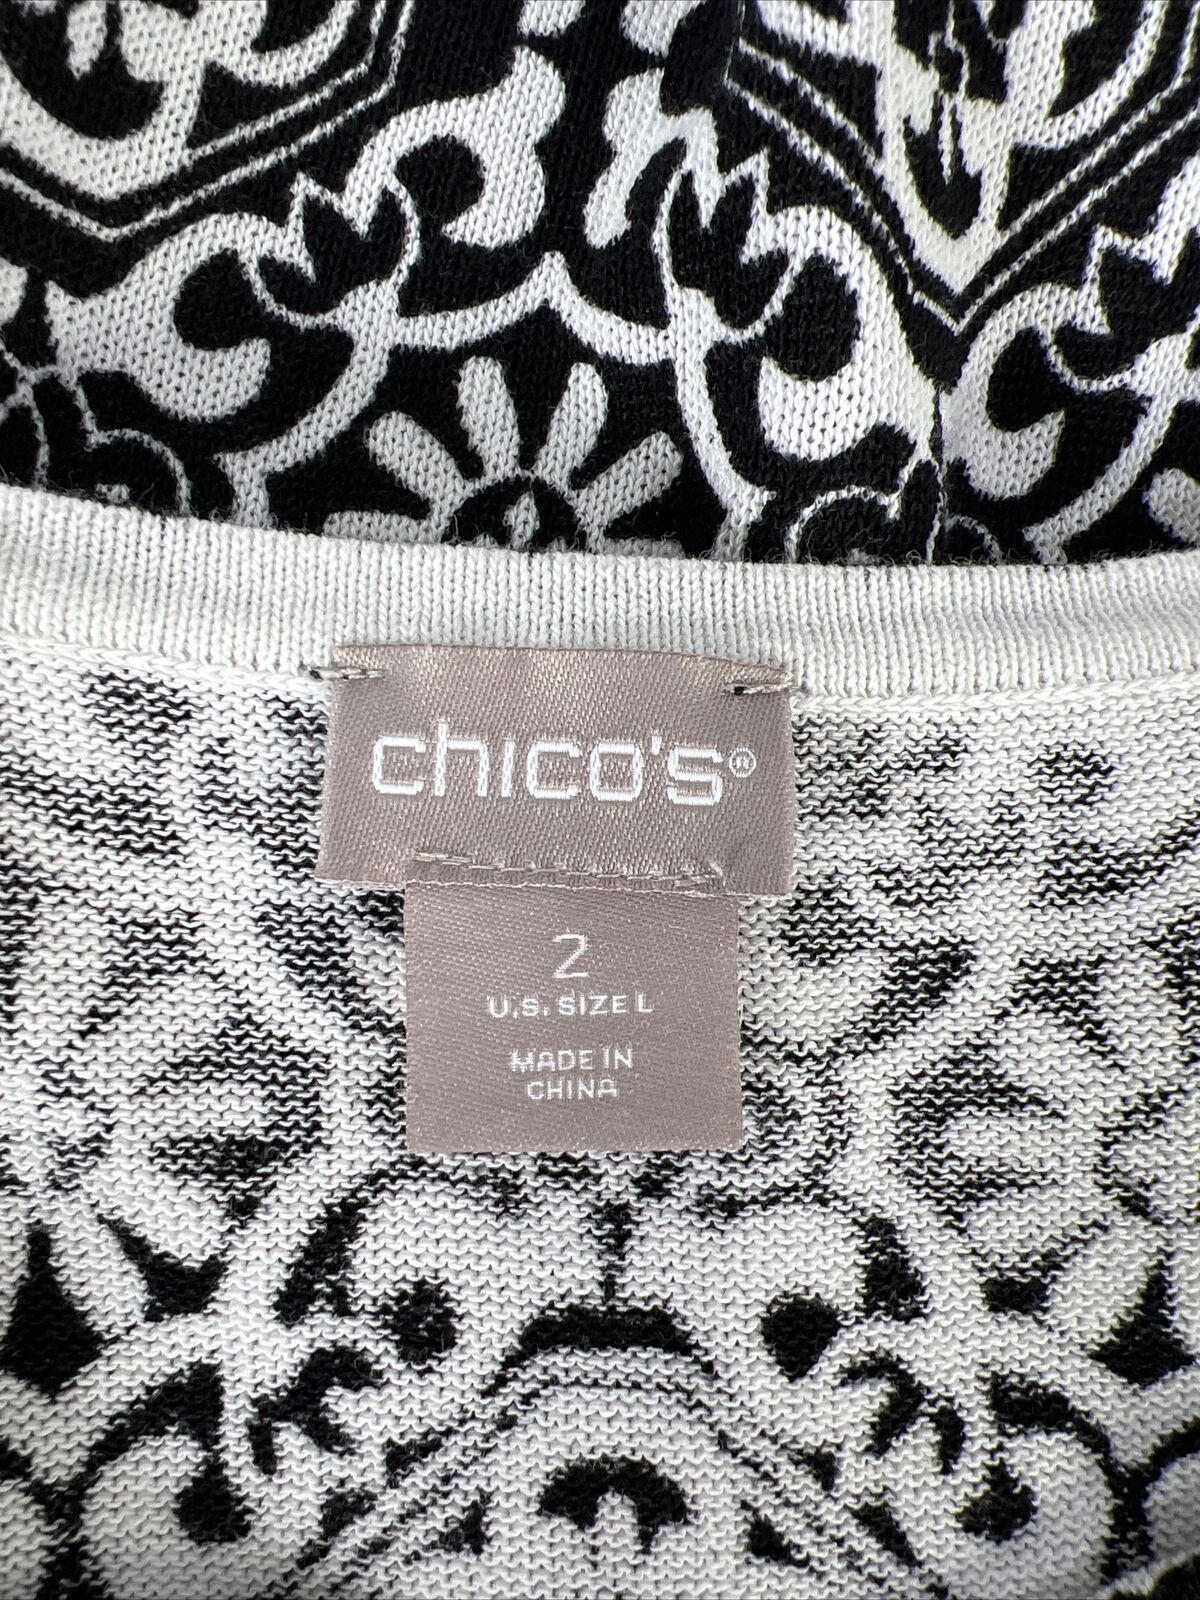 Chico's Women's Black Knit Tank Top - 2/US L